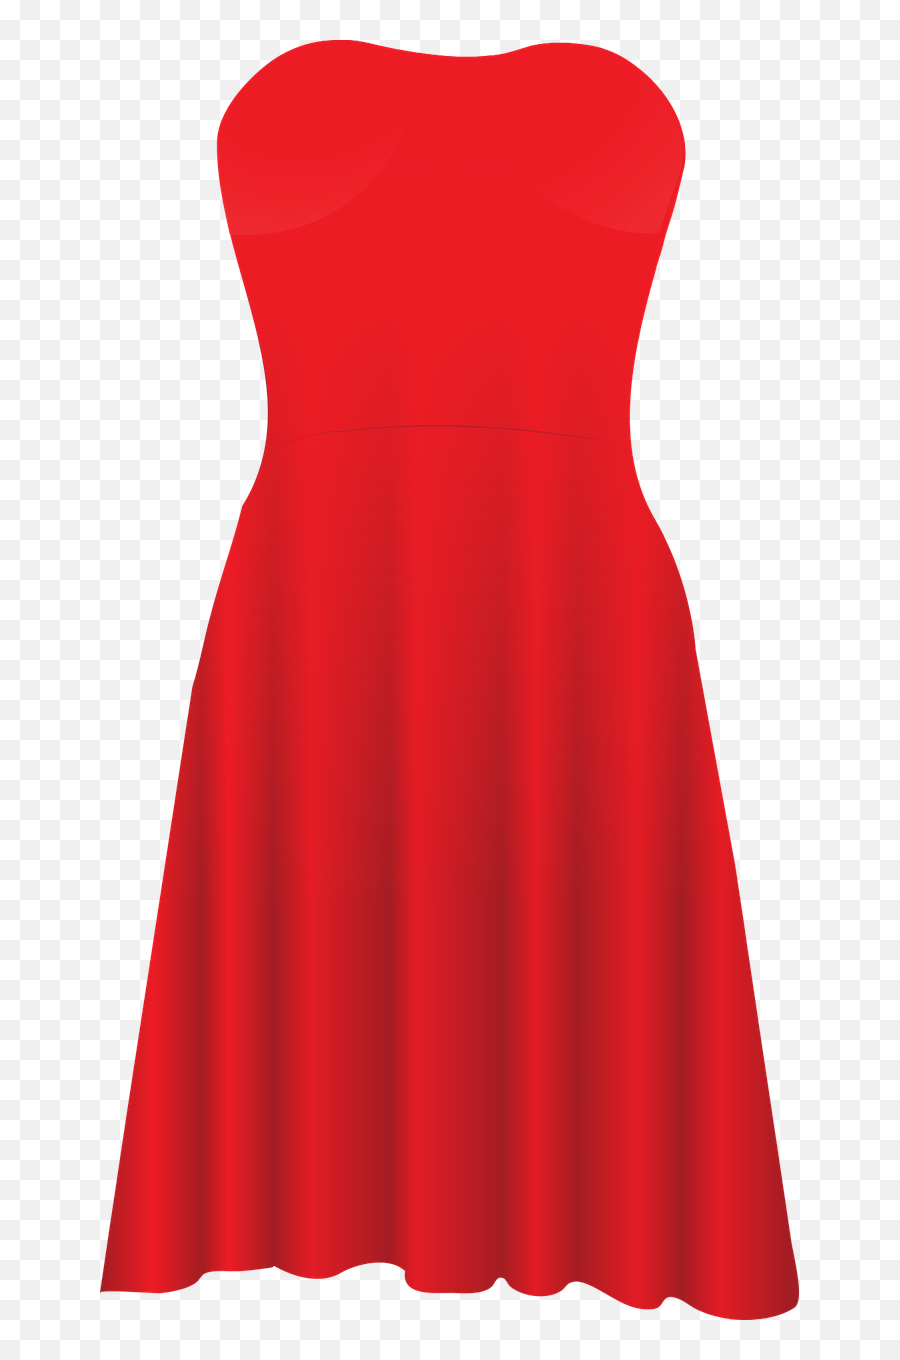 Dress Png Alpha Channel Clipart Images - Dress Icon With Transparent Background,Dress Transparent Background